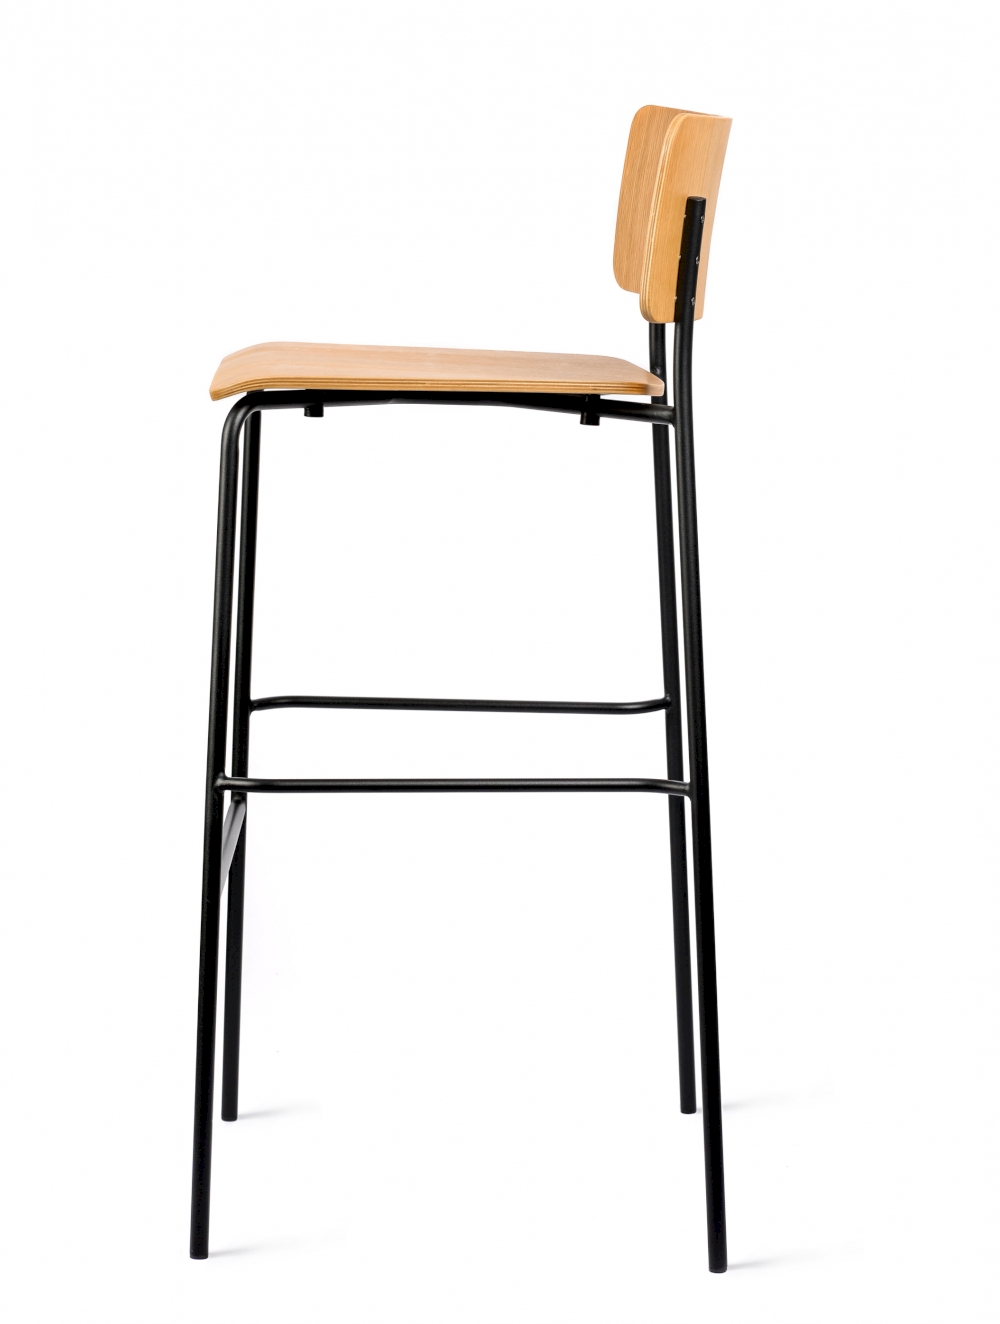 Mi stool metal base bar stool & counter stool. Designed for Dohaus by Mikko Laakkonen.